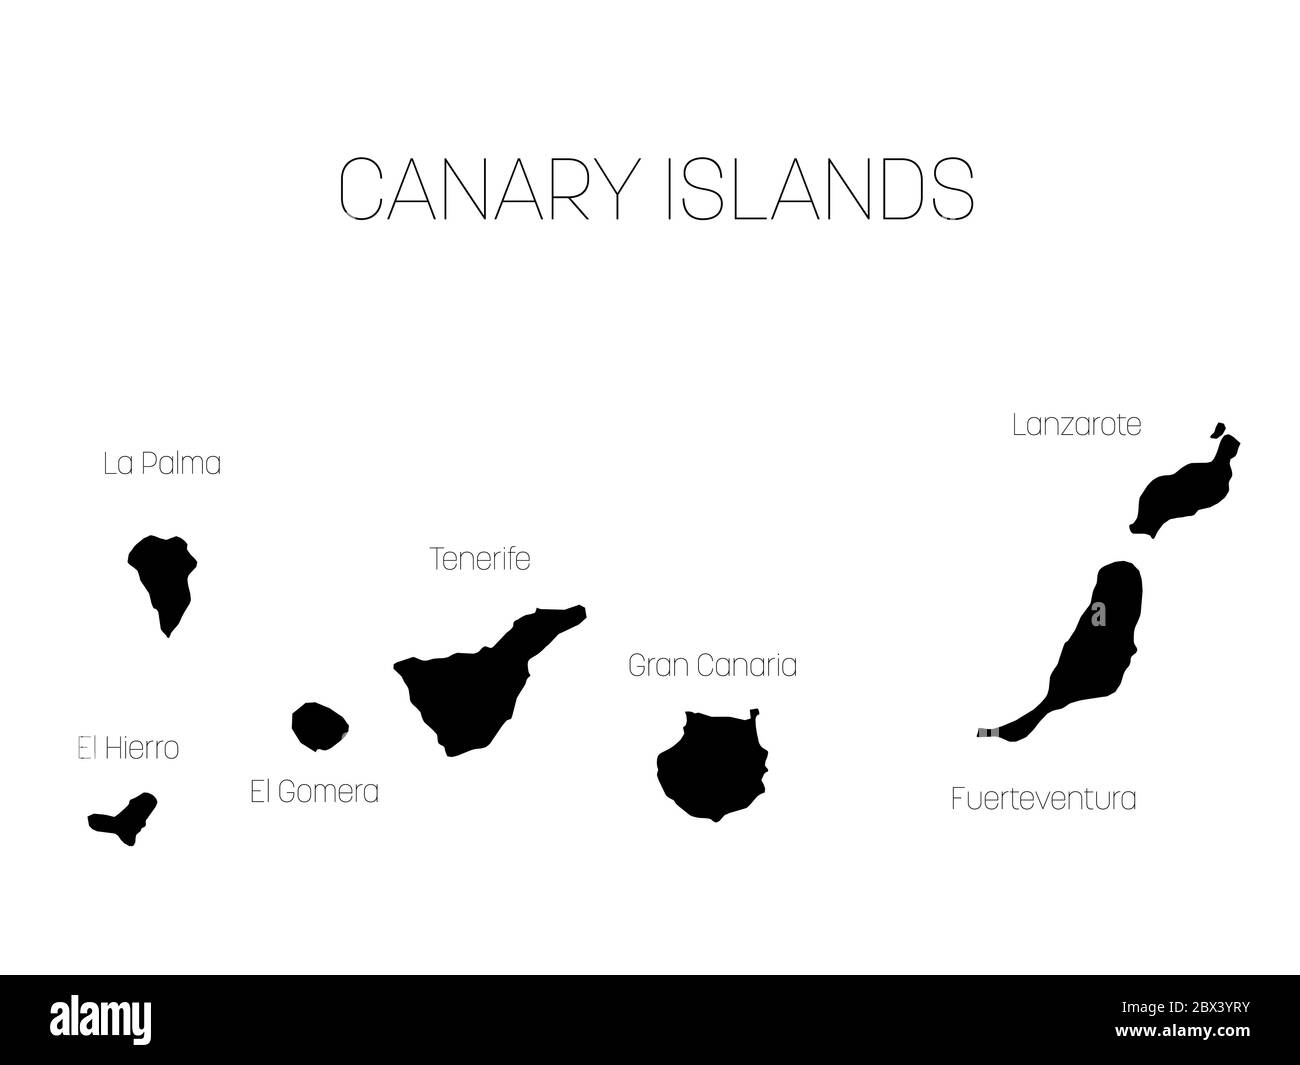 Map of Canary Islands, Spain, with labels of each island - El Hierro, La Palma, La Gomera, Tenerife, Gran Canaria, Fuerteventura and Lanzarote. Black vector silhouette on white background. Stock Vector